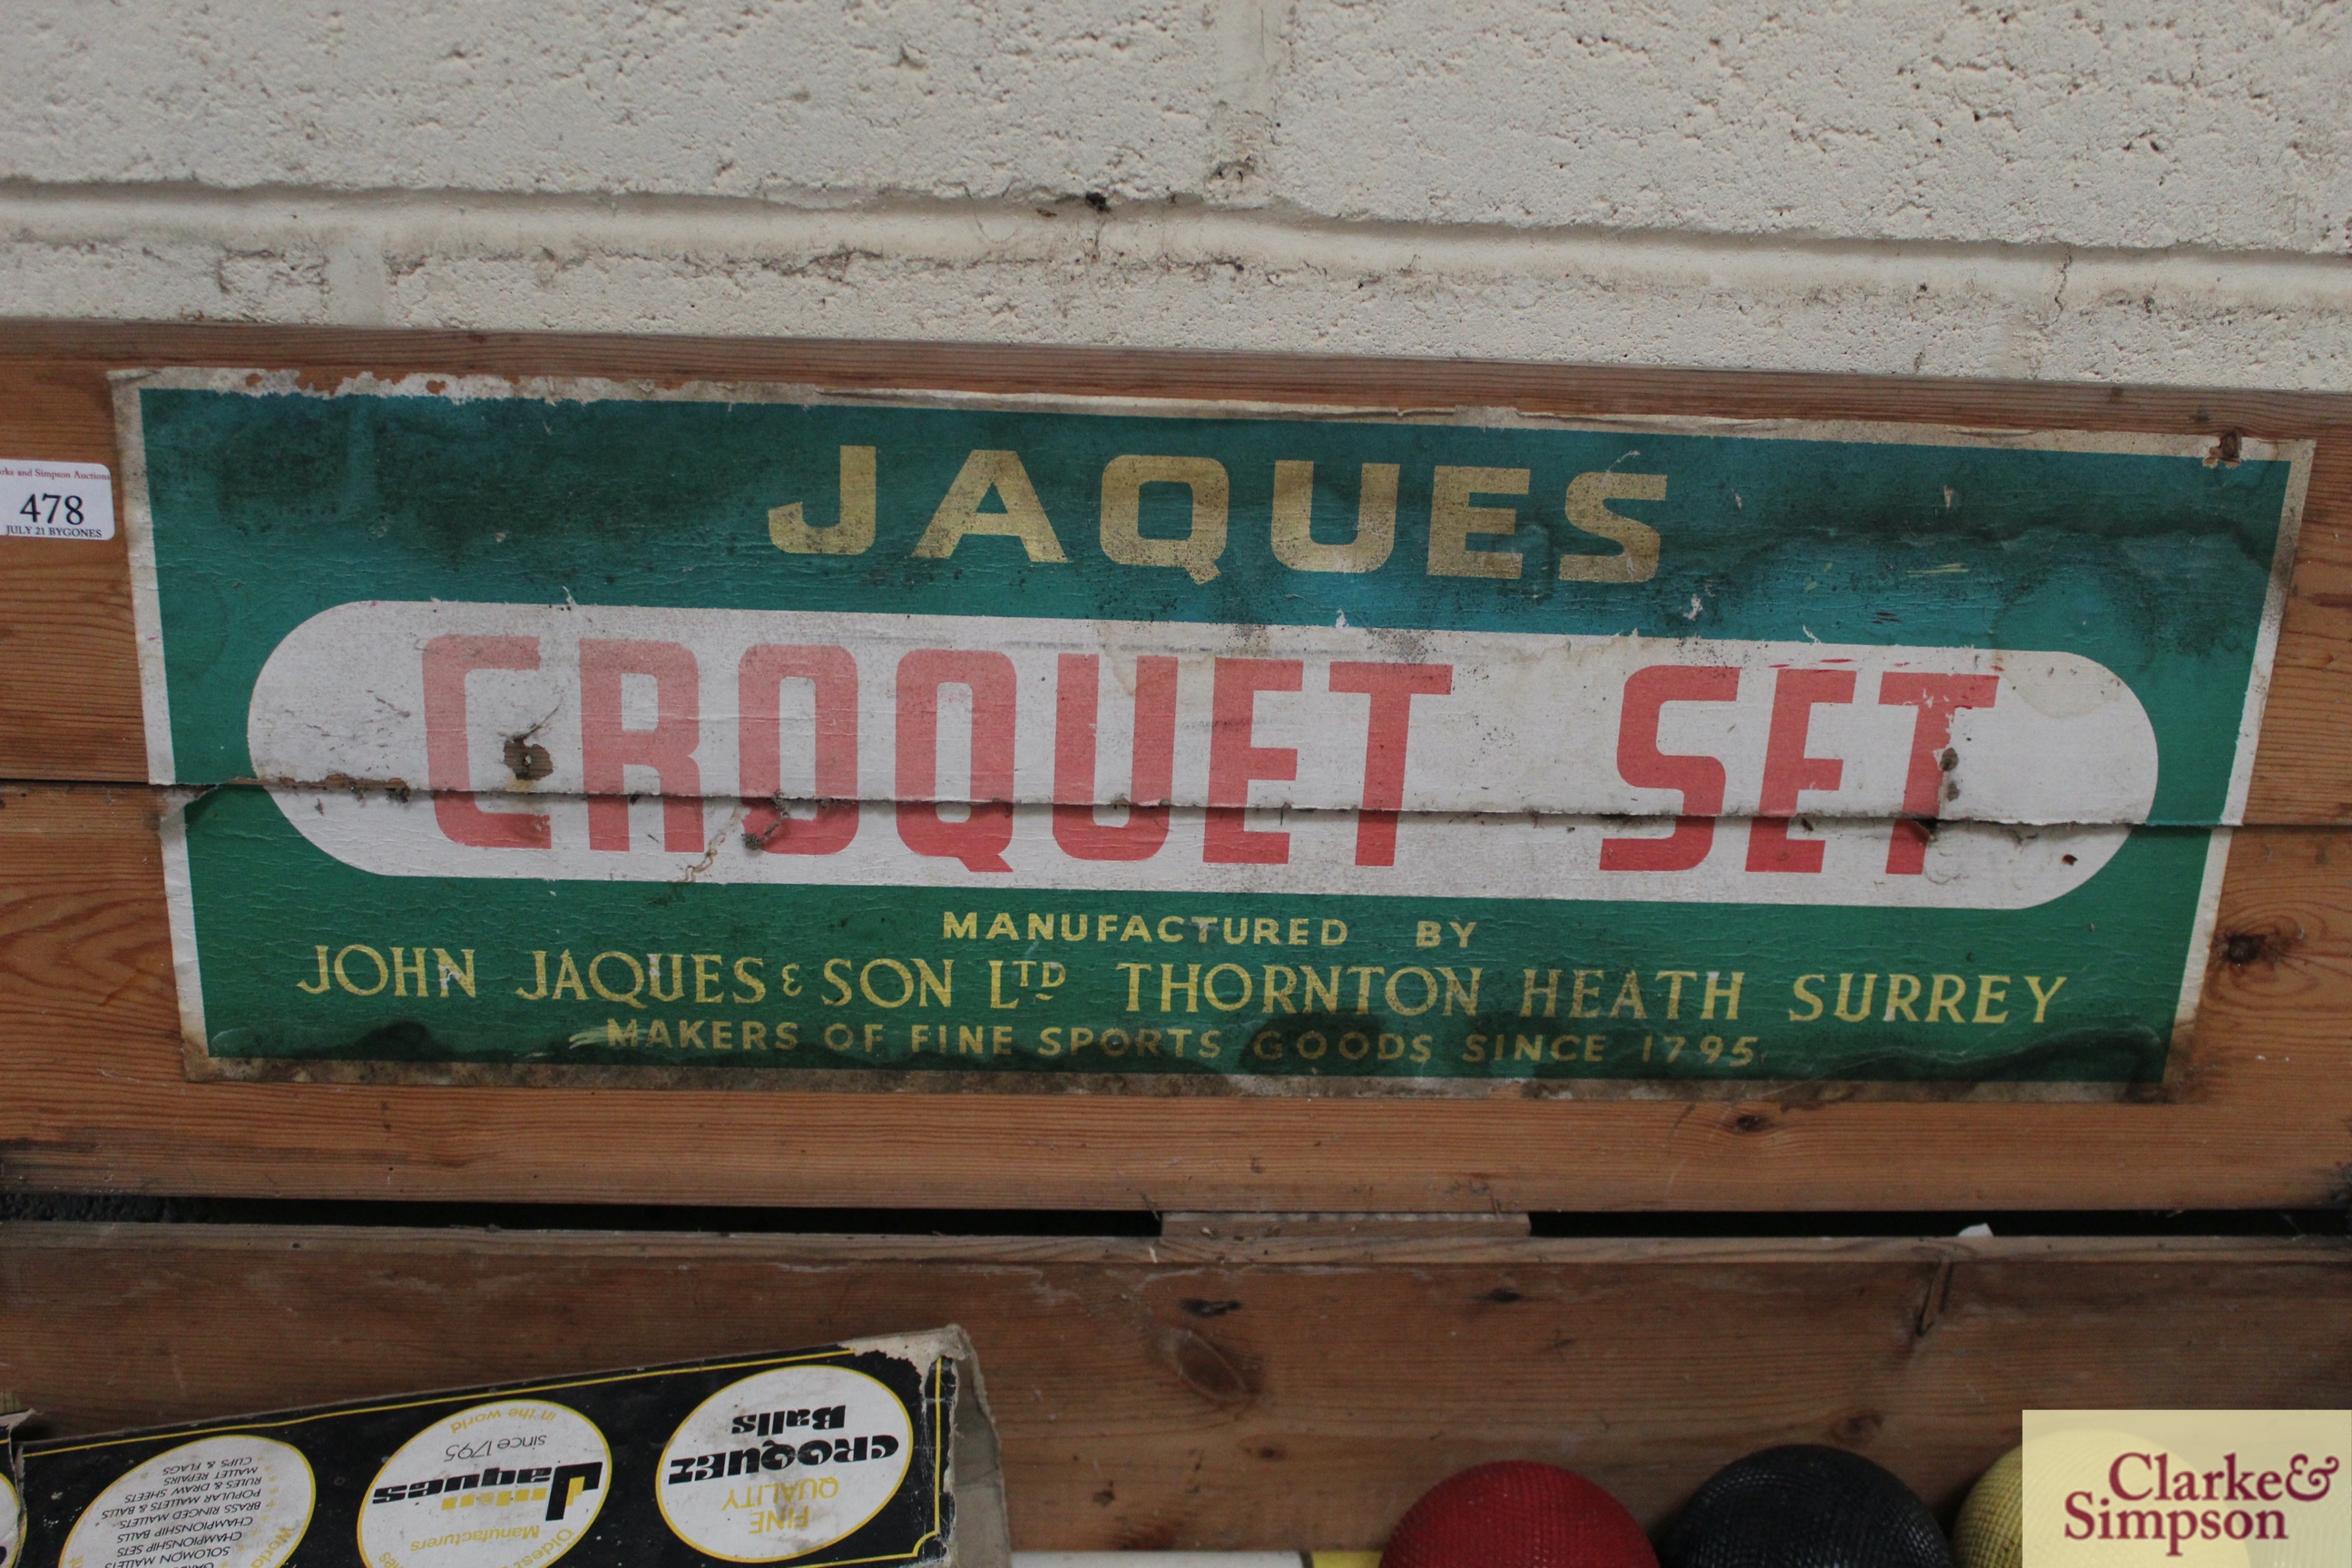 A Jaques croquet set - Image 4 of 4